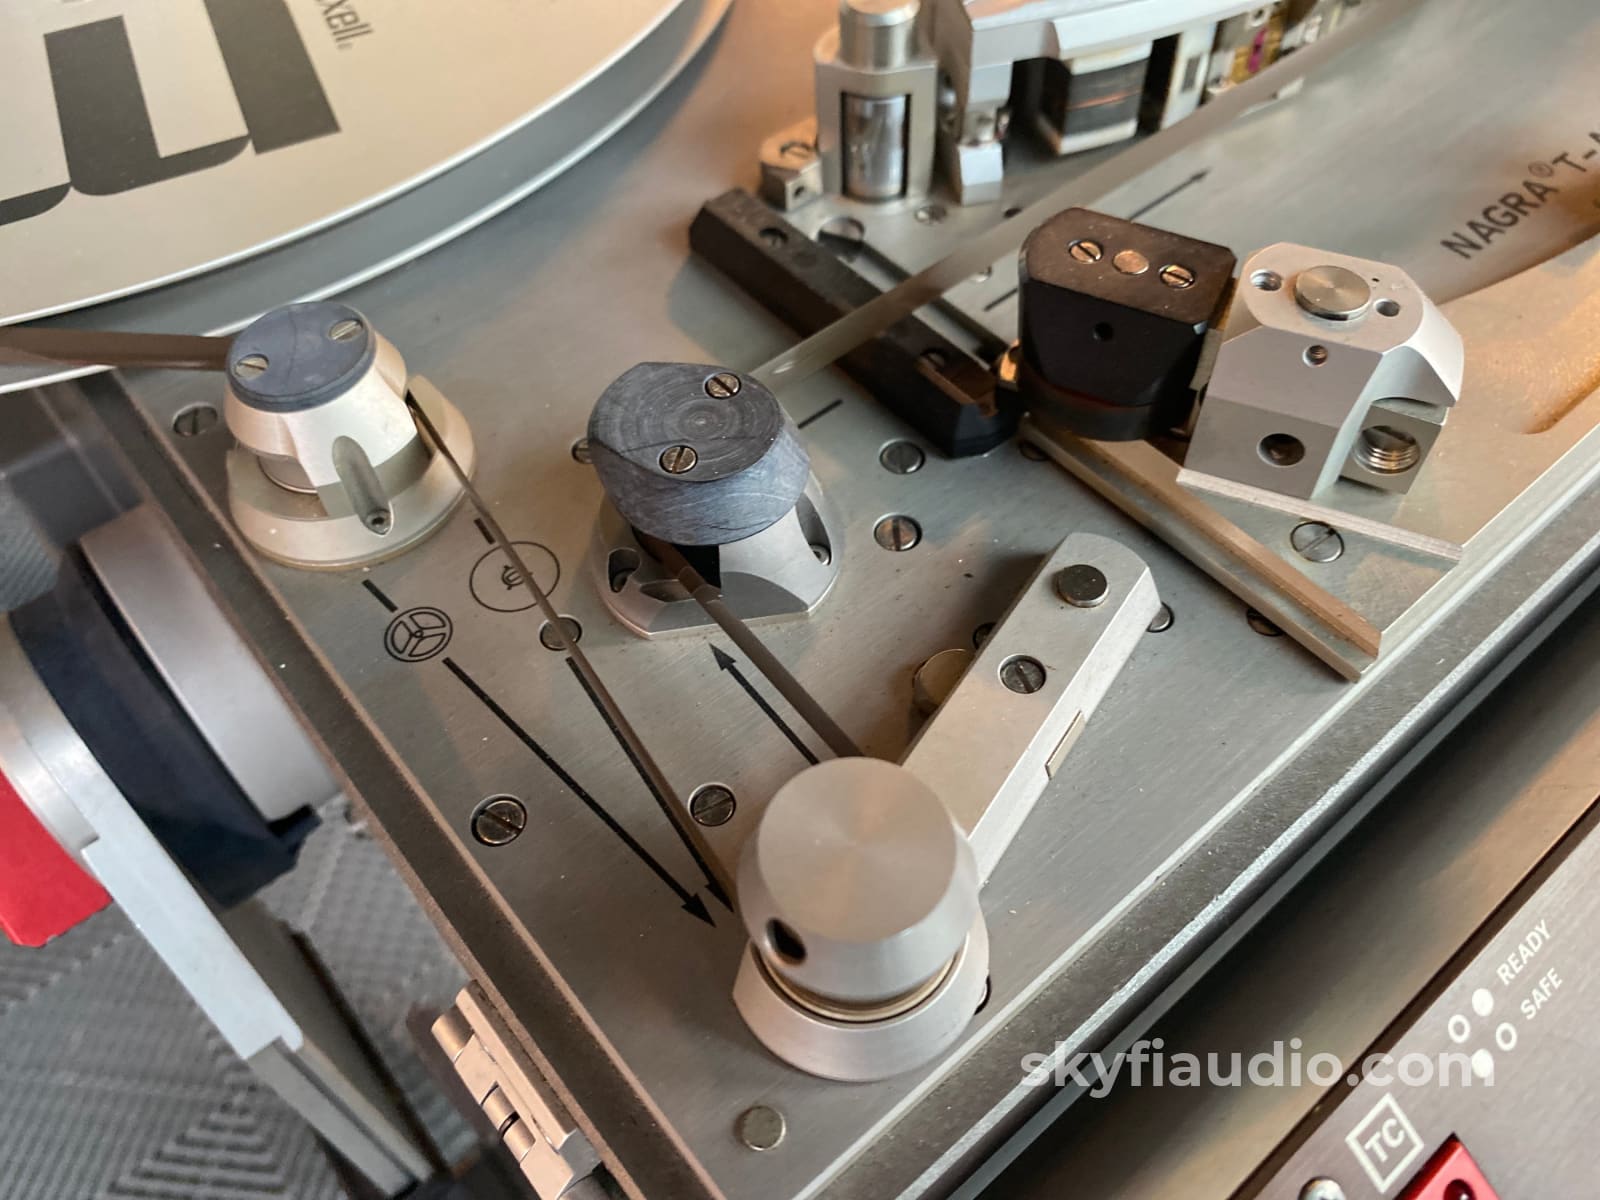 Nagra T-Audio Reel To Machine - Legendary Ready To Ship Tape Deck